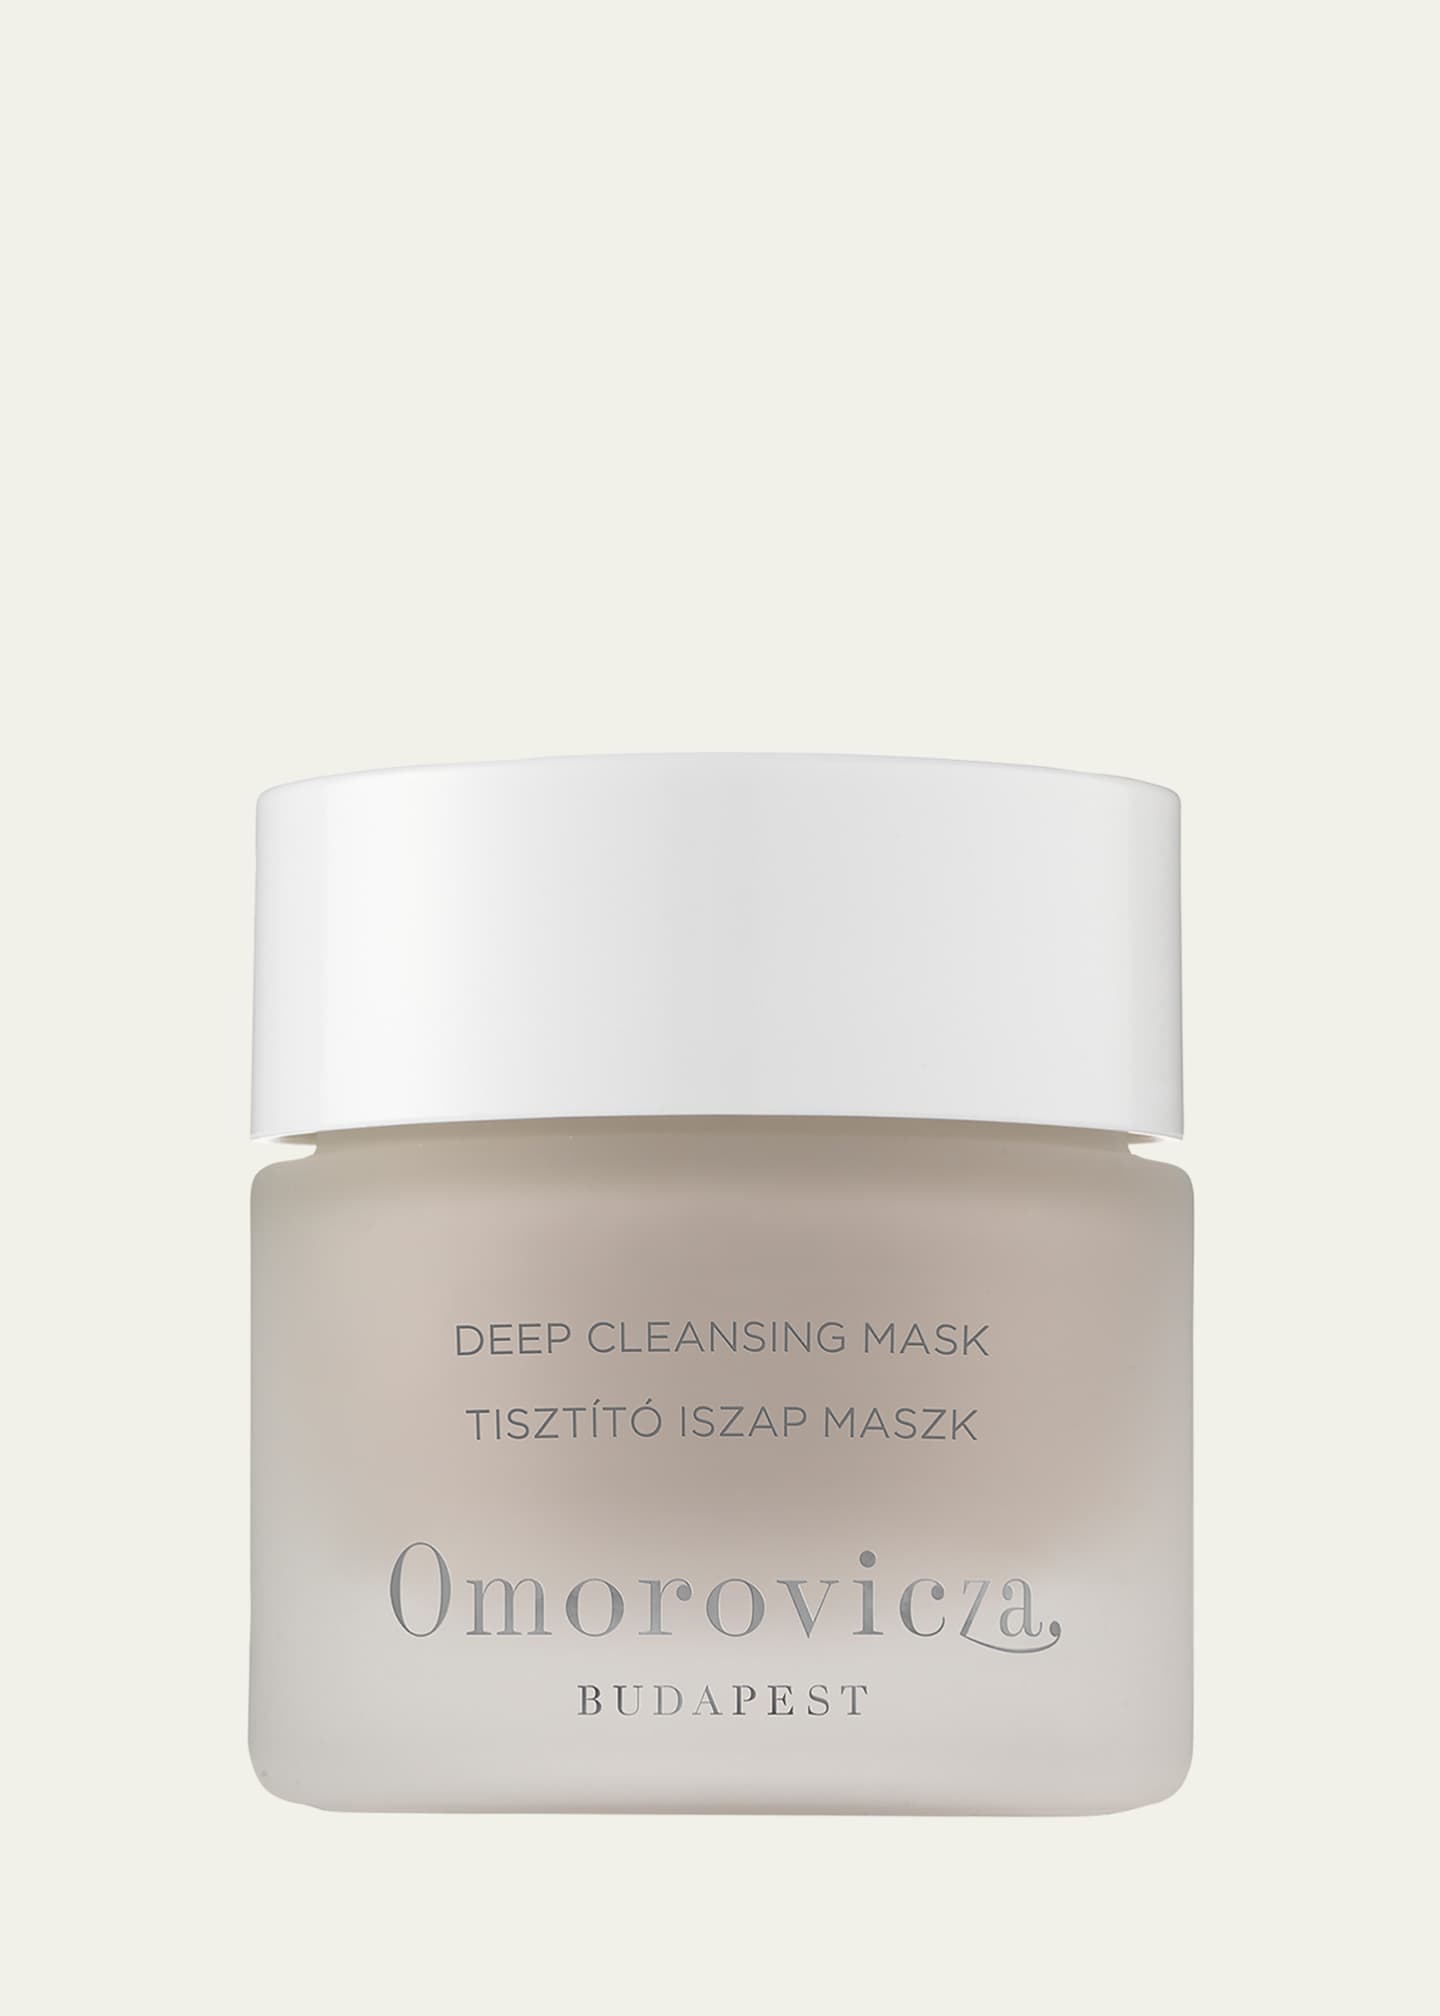 Omorovicza Deep Cleansing Mask, 1.7 oz. Image 1 of 5